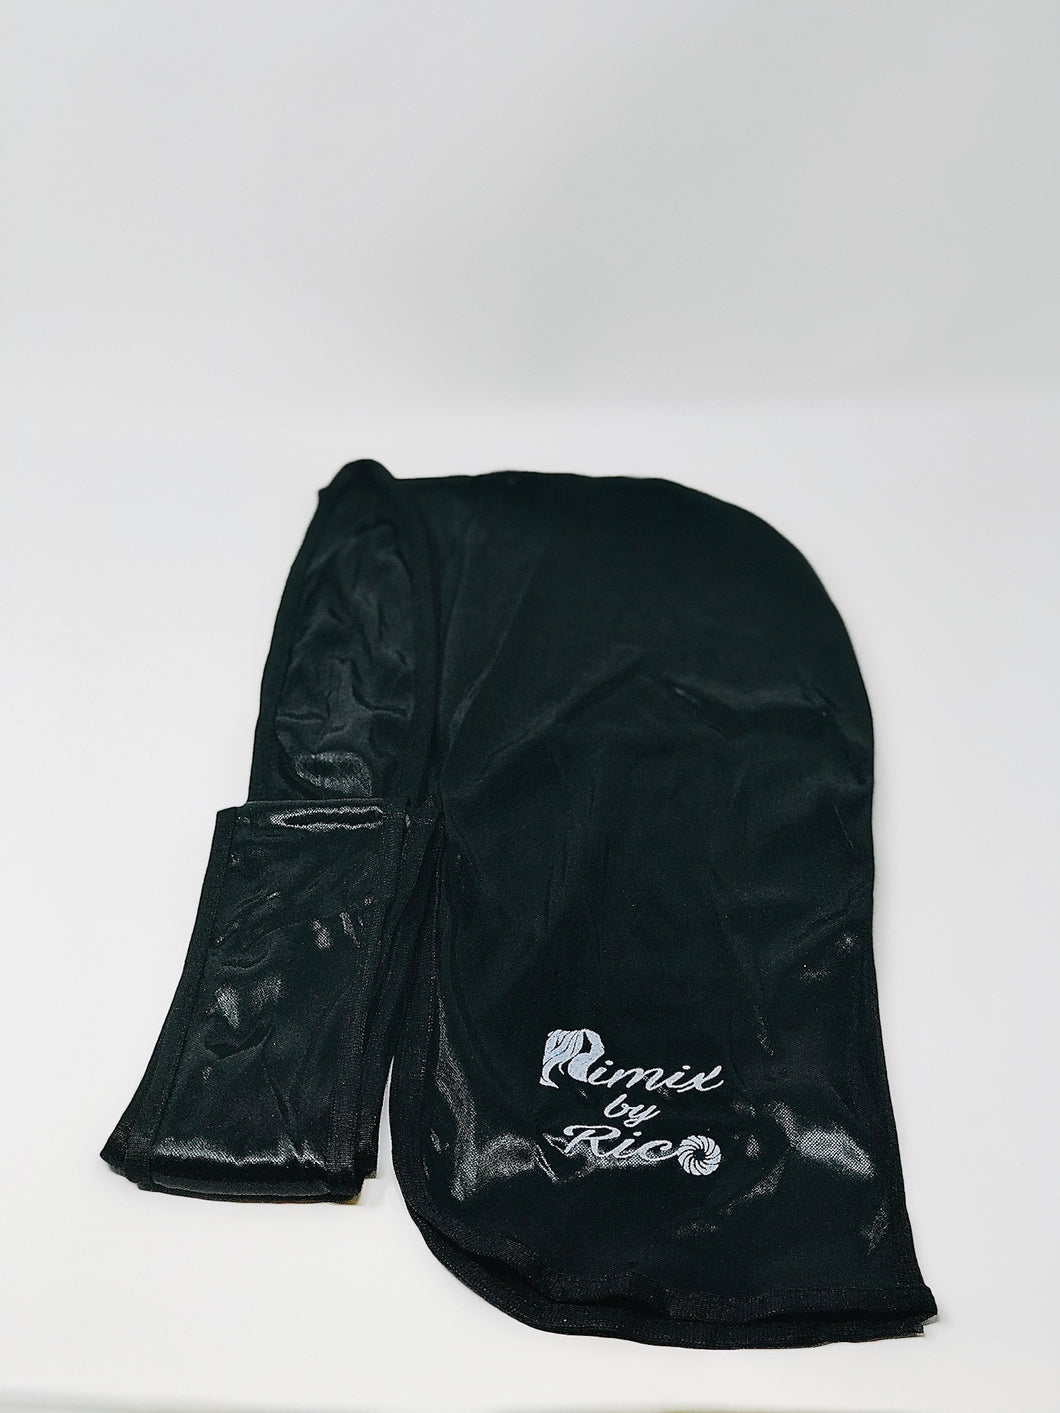 Rimix 8K Ultra Tuxedo Durag**Limited Edition - Black/Black Trim